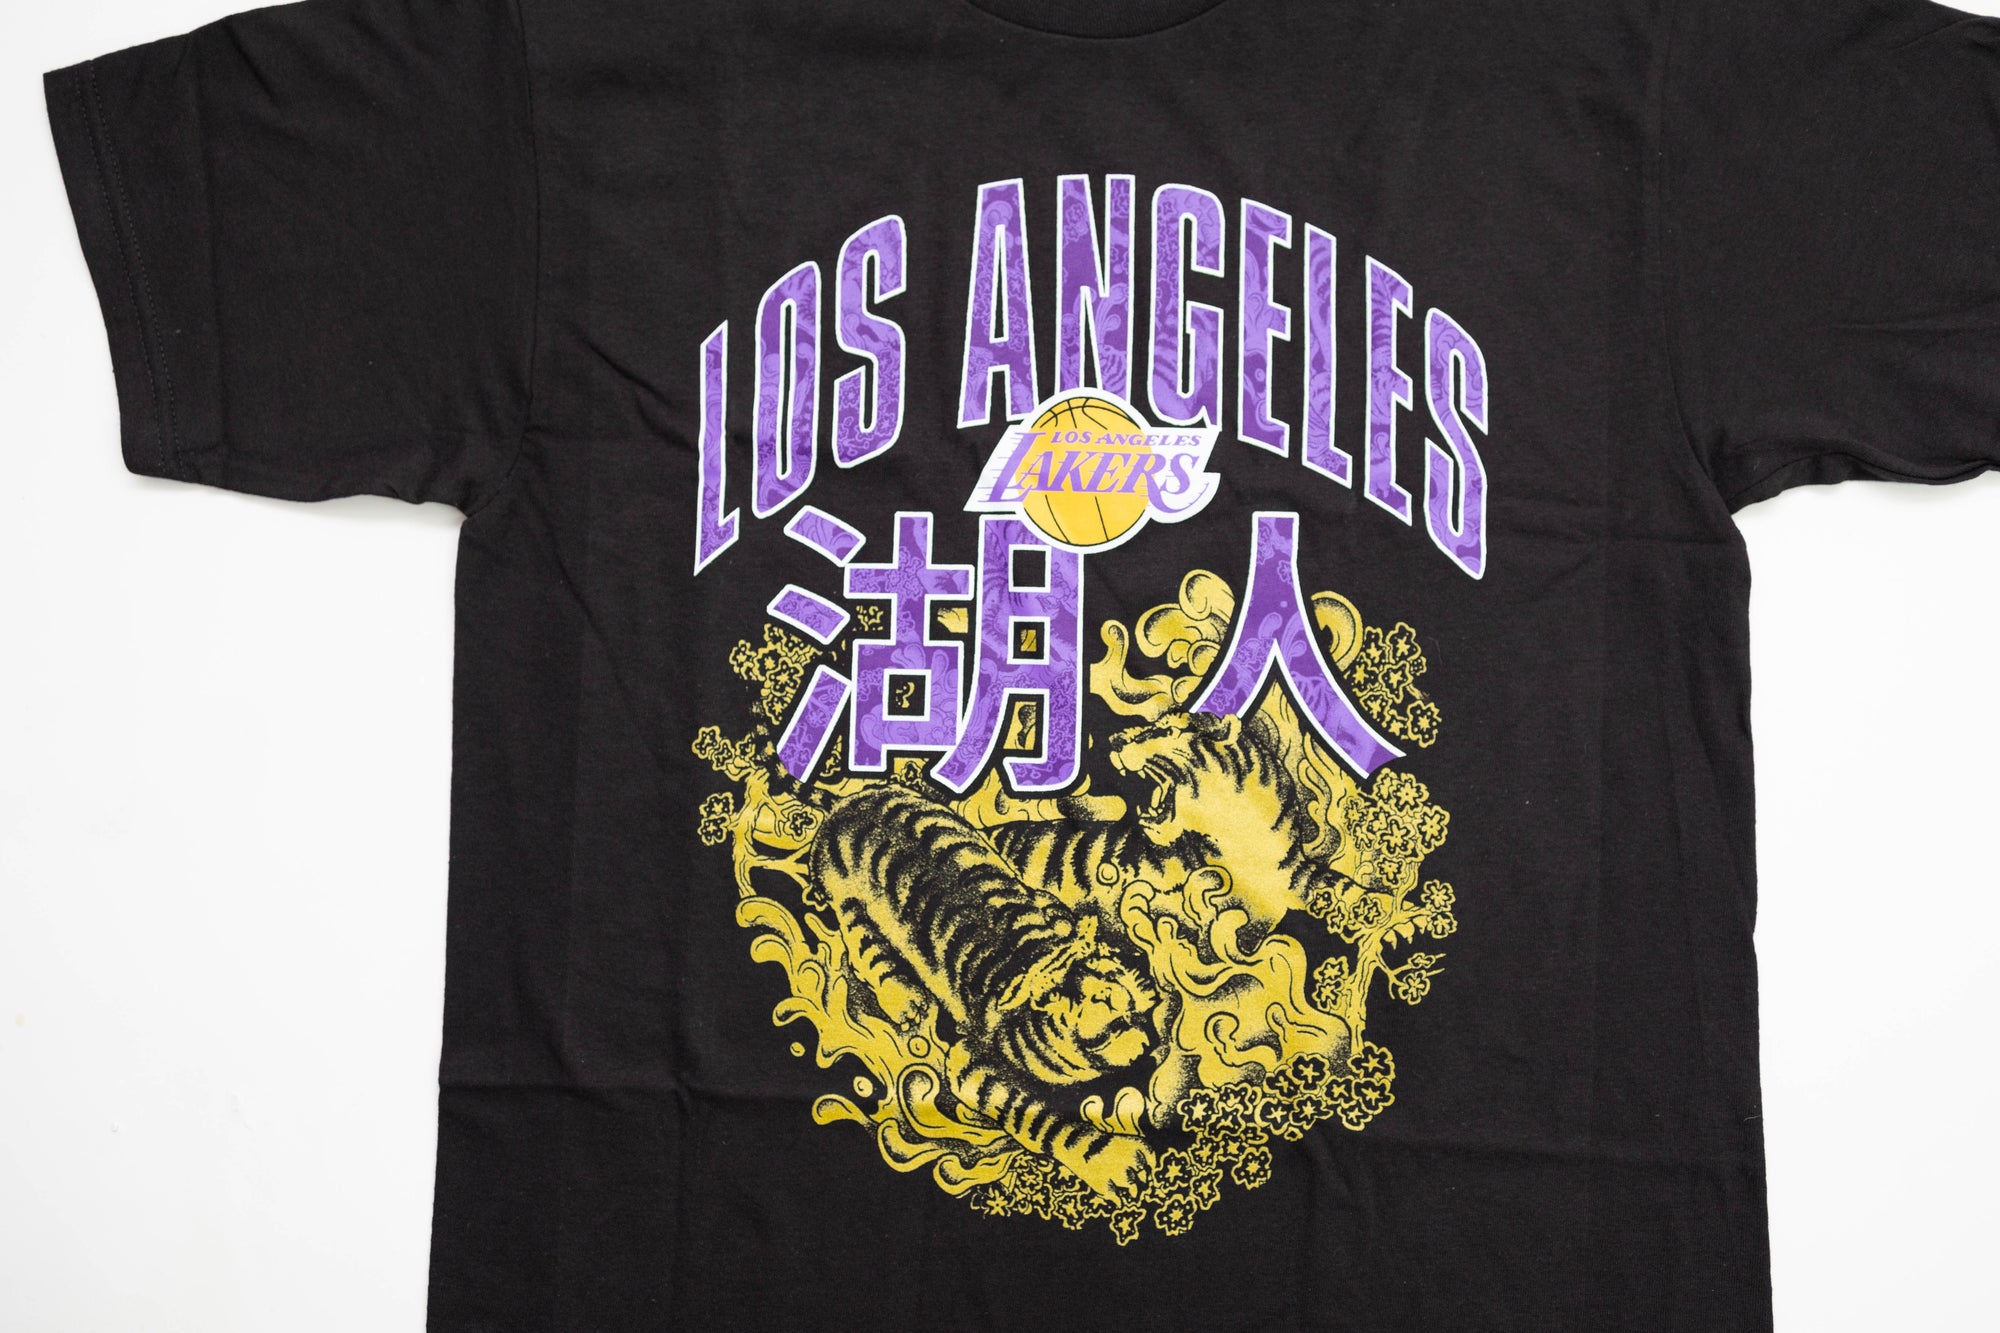 Nike Basketball NBA LA Lakers unisex graphic long sleeve t-shirt in black  and purple